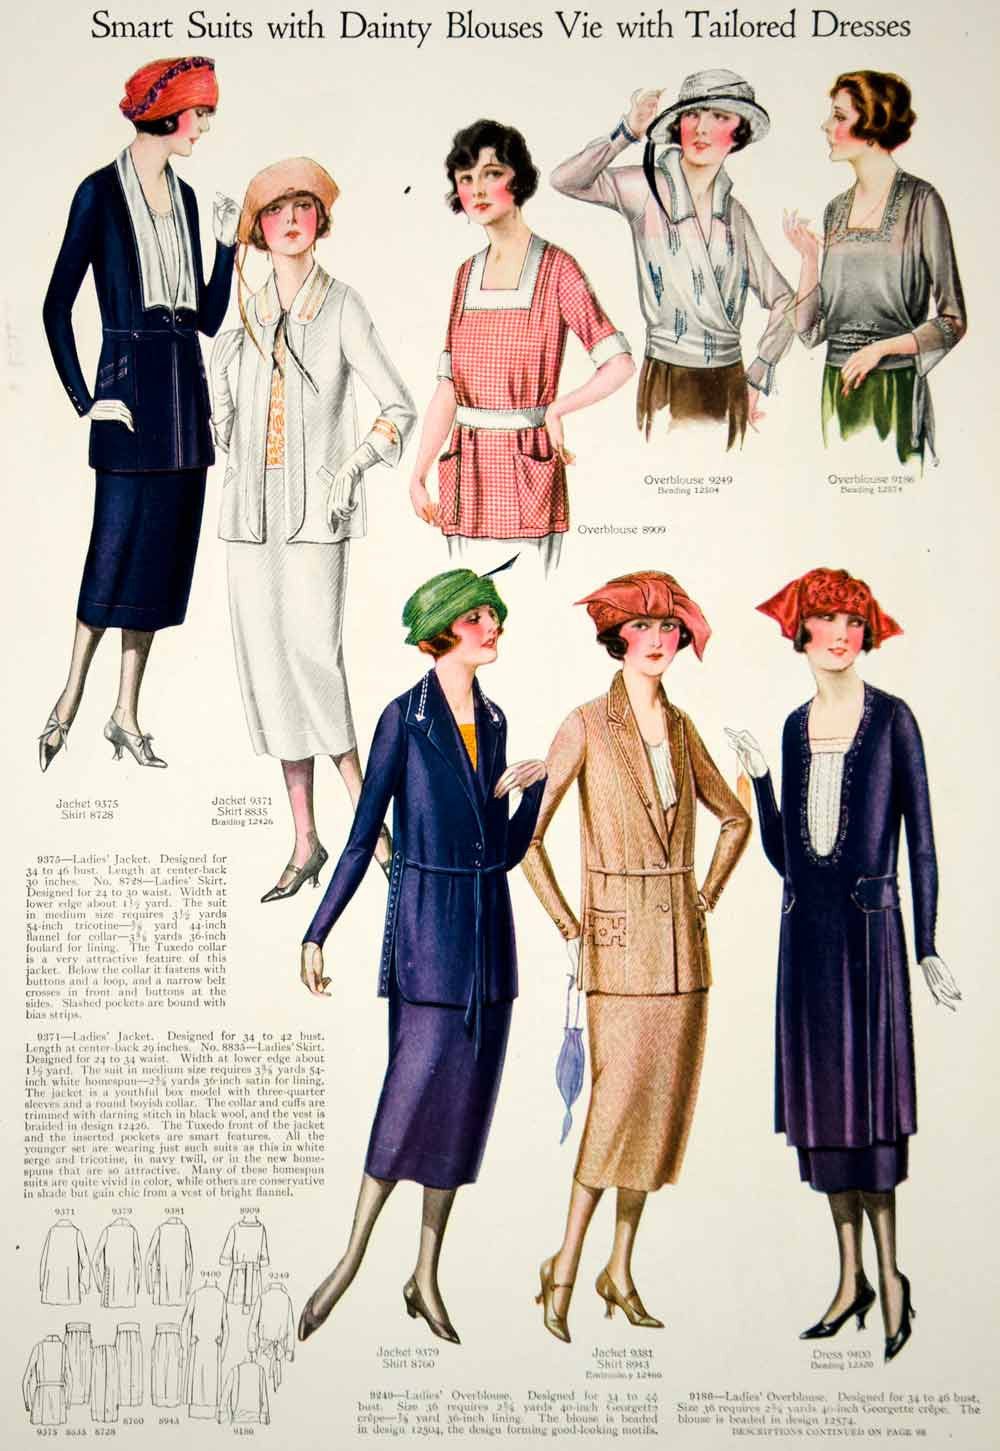 1921 Print Flapper Era Fashion Illustrations Women Spring Dresses Turban Hats - Period Paper
 - 2